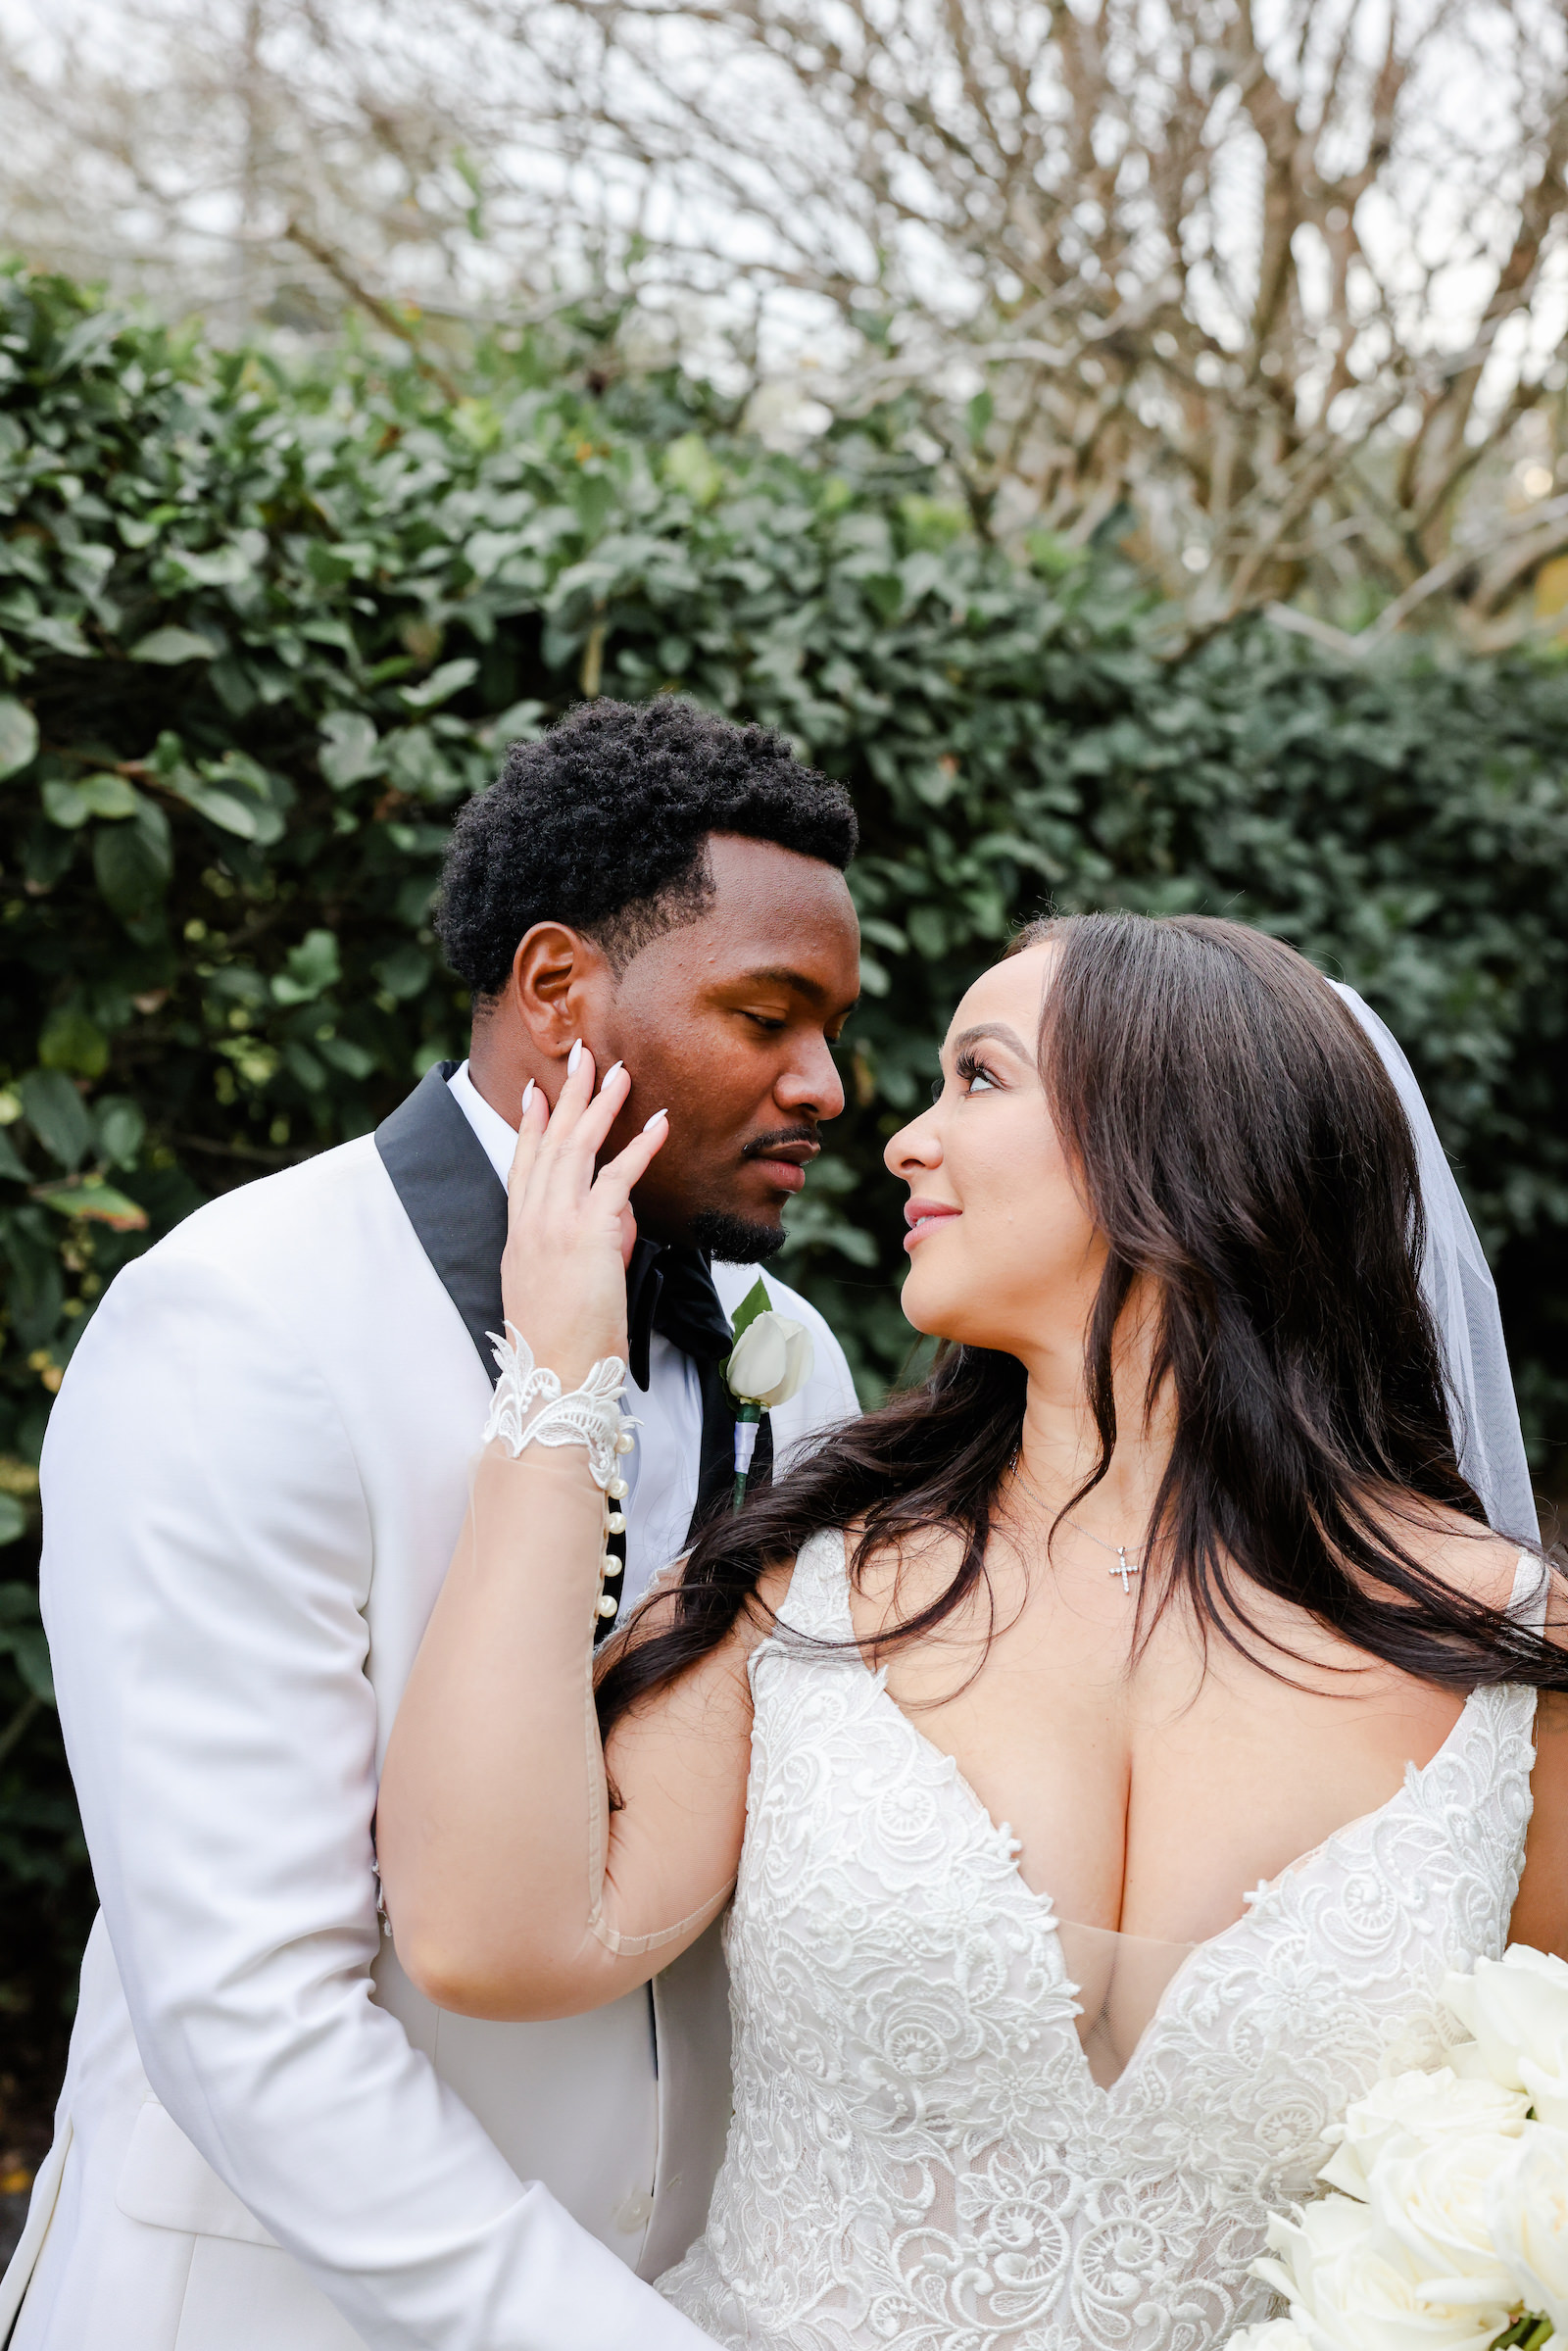 Modern Romantic Glam Bride and Groom Wedding Portrait | Tampa Bay Wedding Photographer Lifelong Photography Studio | Wedding Hair and Makeup Femme Akoi Beauty Studio